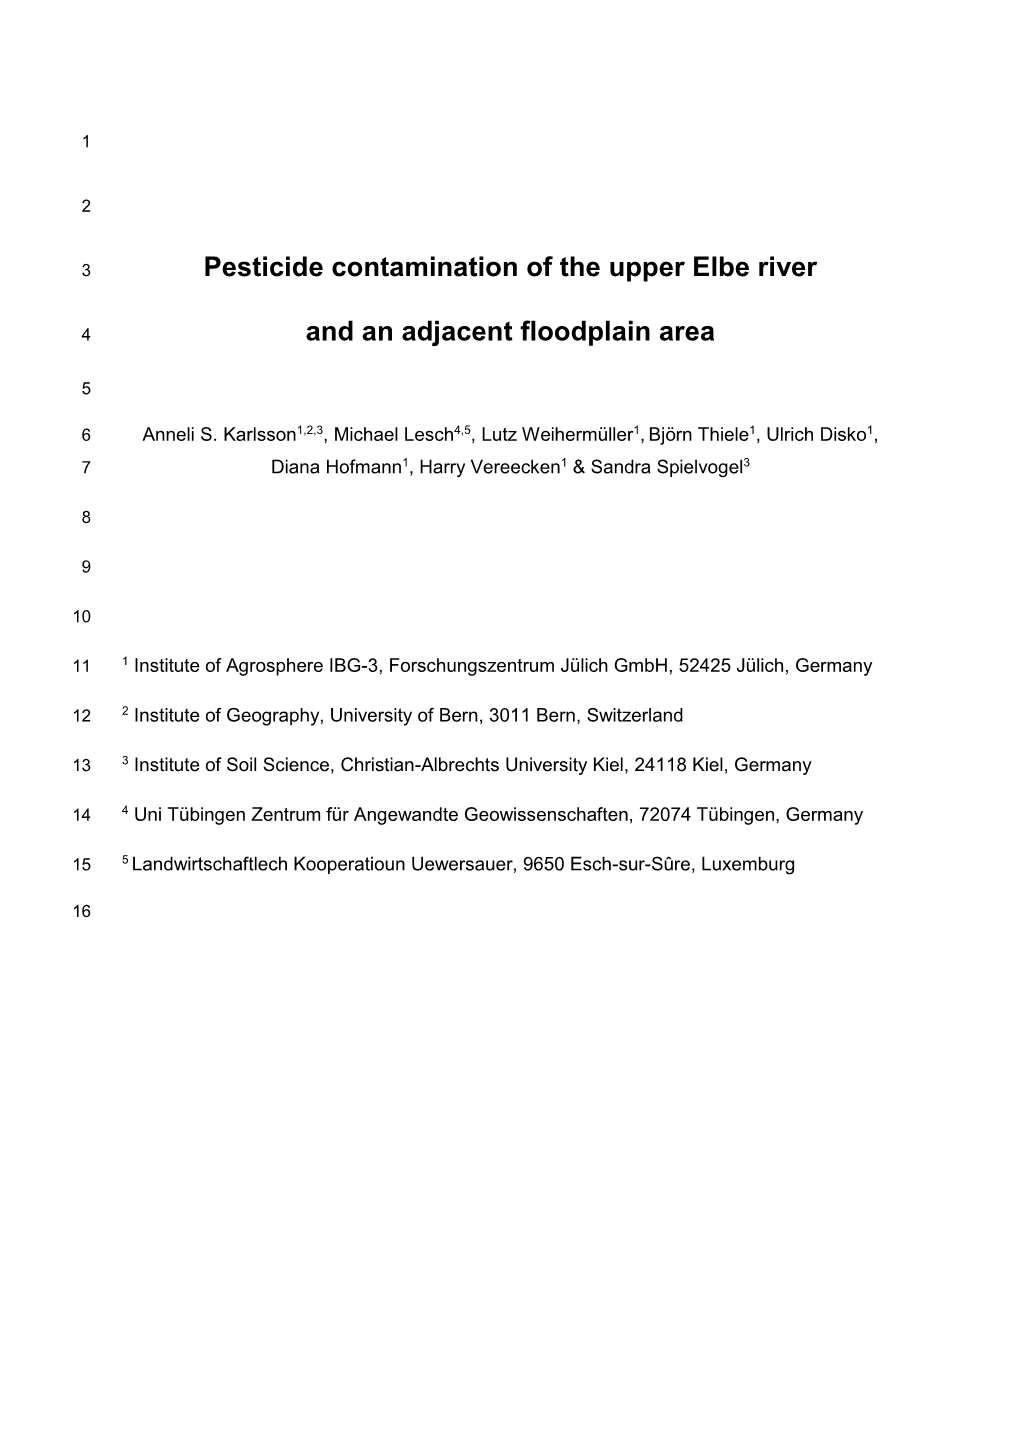 Pesticide Contamination of the Upper Elbe River